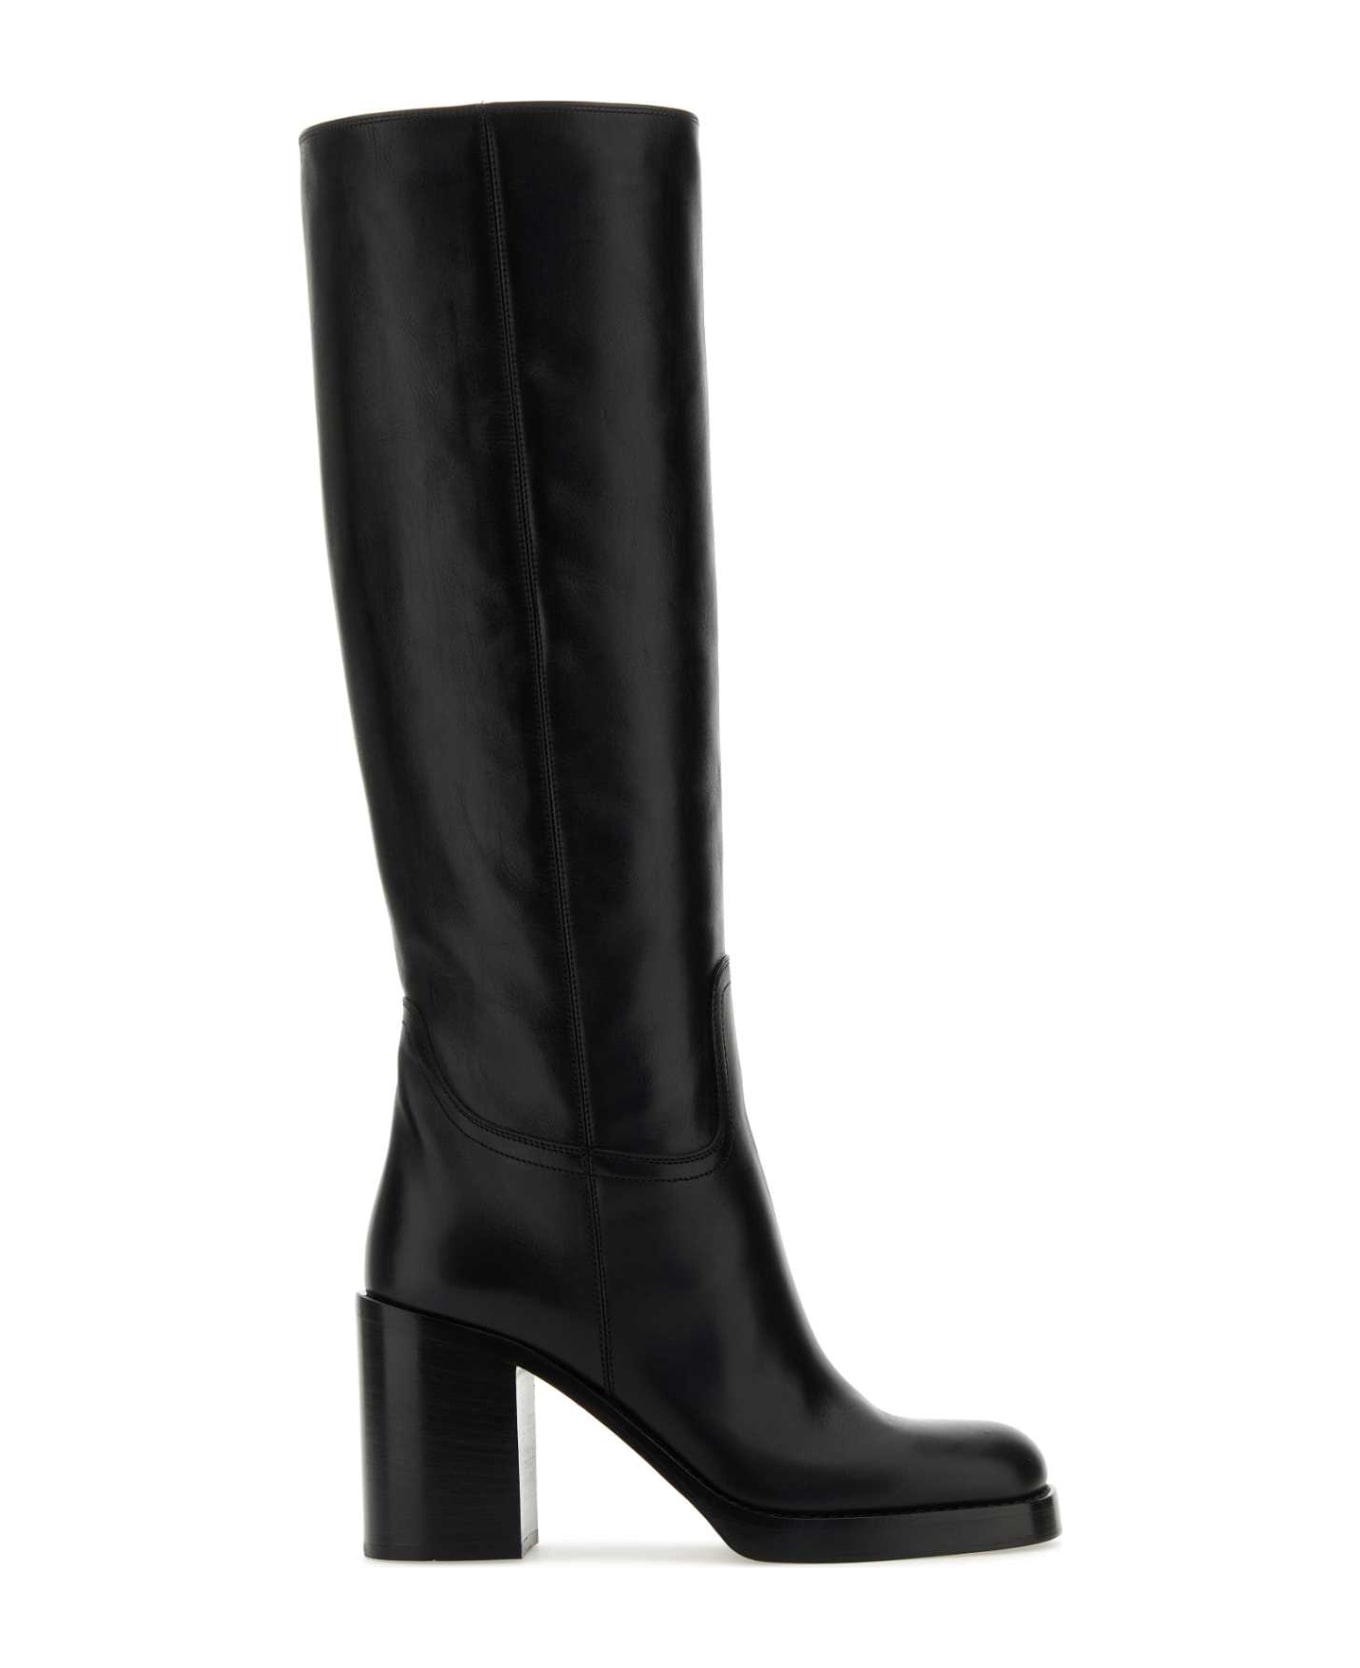 Prada Black Leather Boots - NERO ブーツ